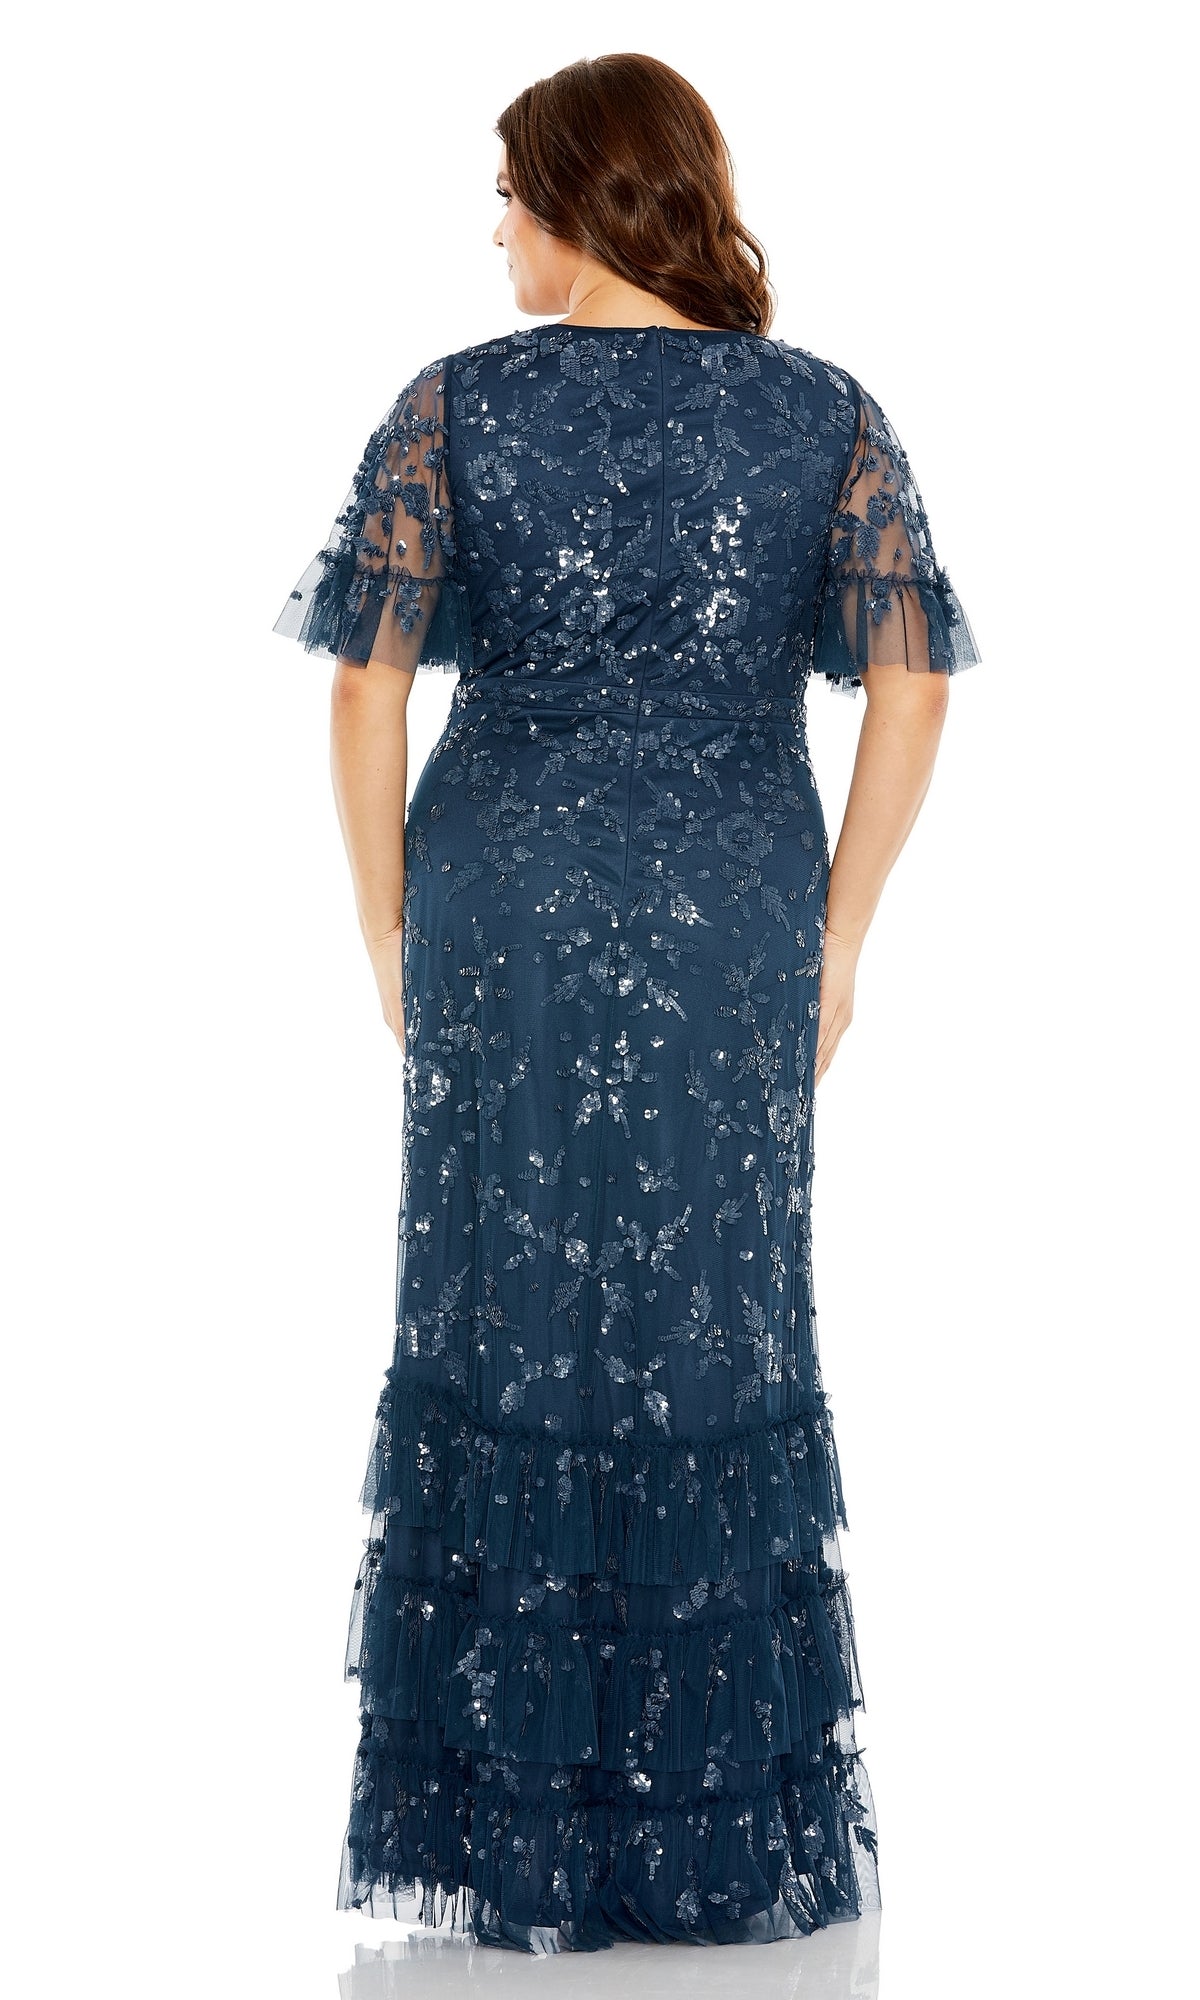 Long Plus-Size Formal Dress 9270 by Mac Duggal